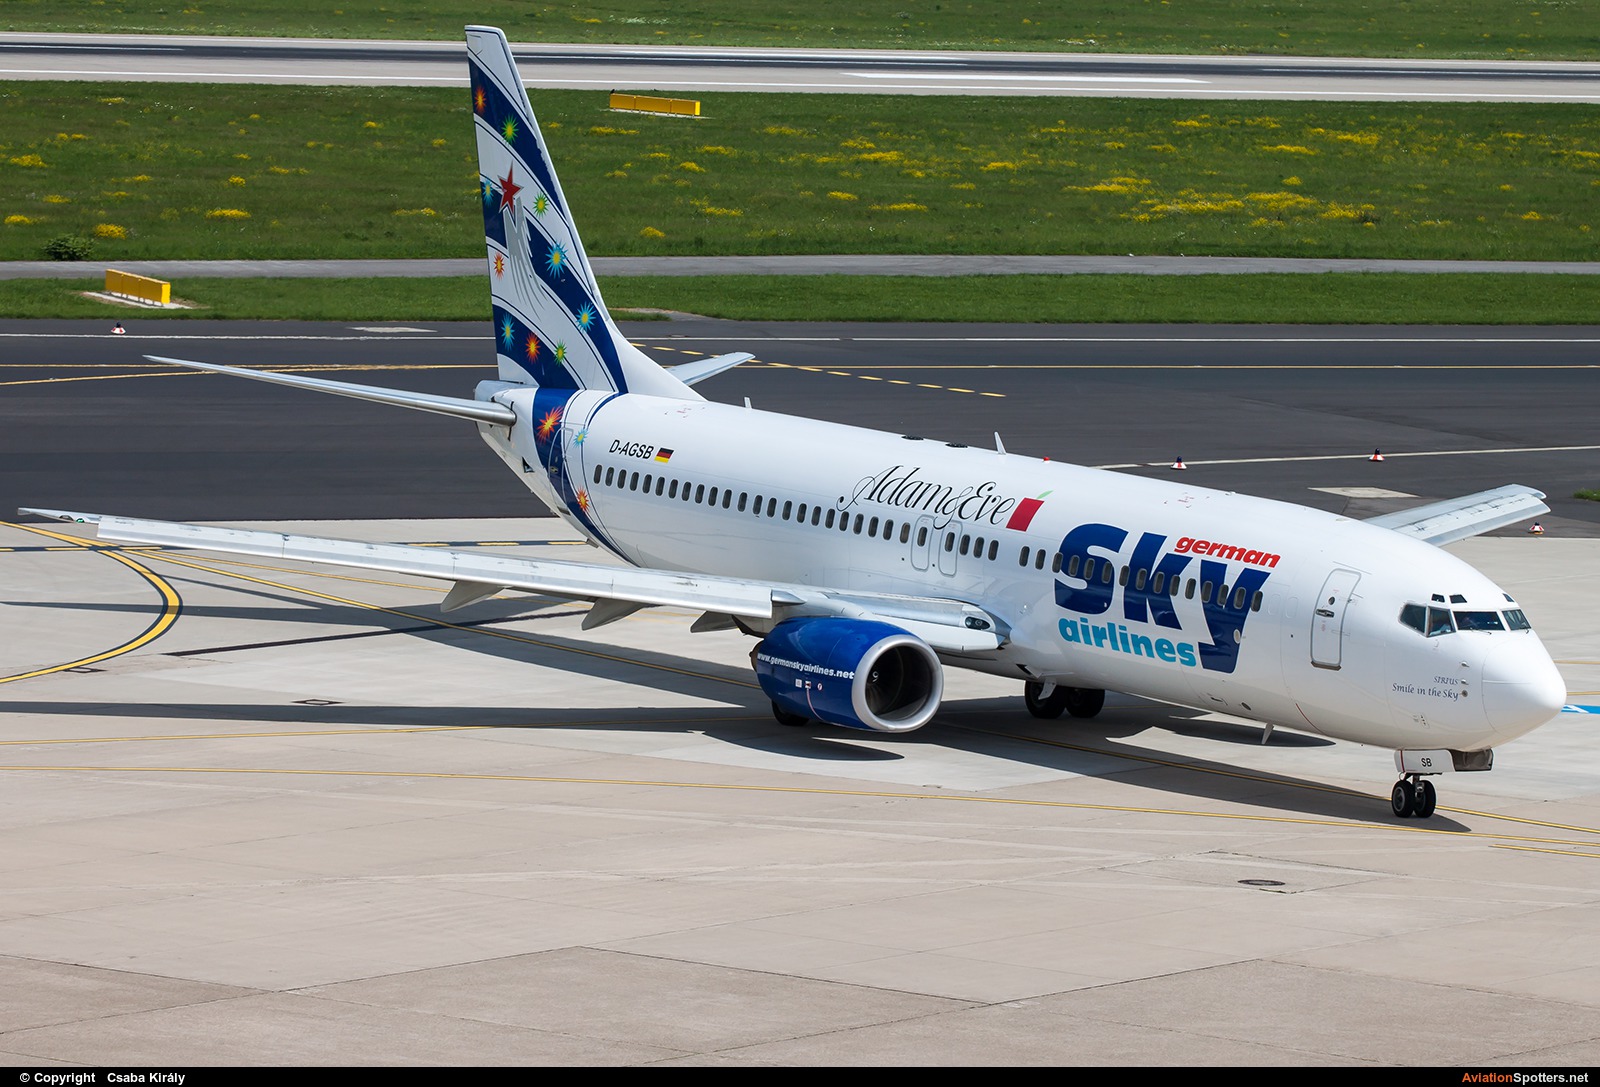 German Sky Airlines  -  737-800  (D-AGSB) By Csaba Király (Csaba Kiraly)